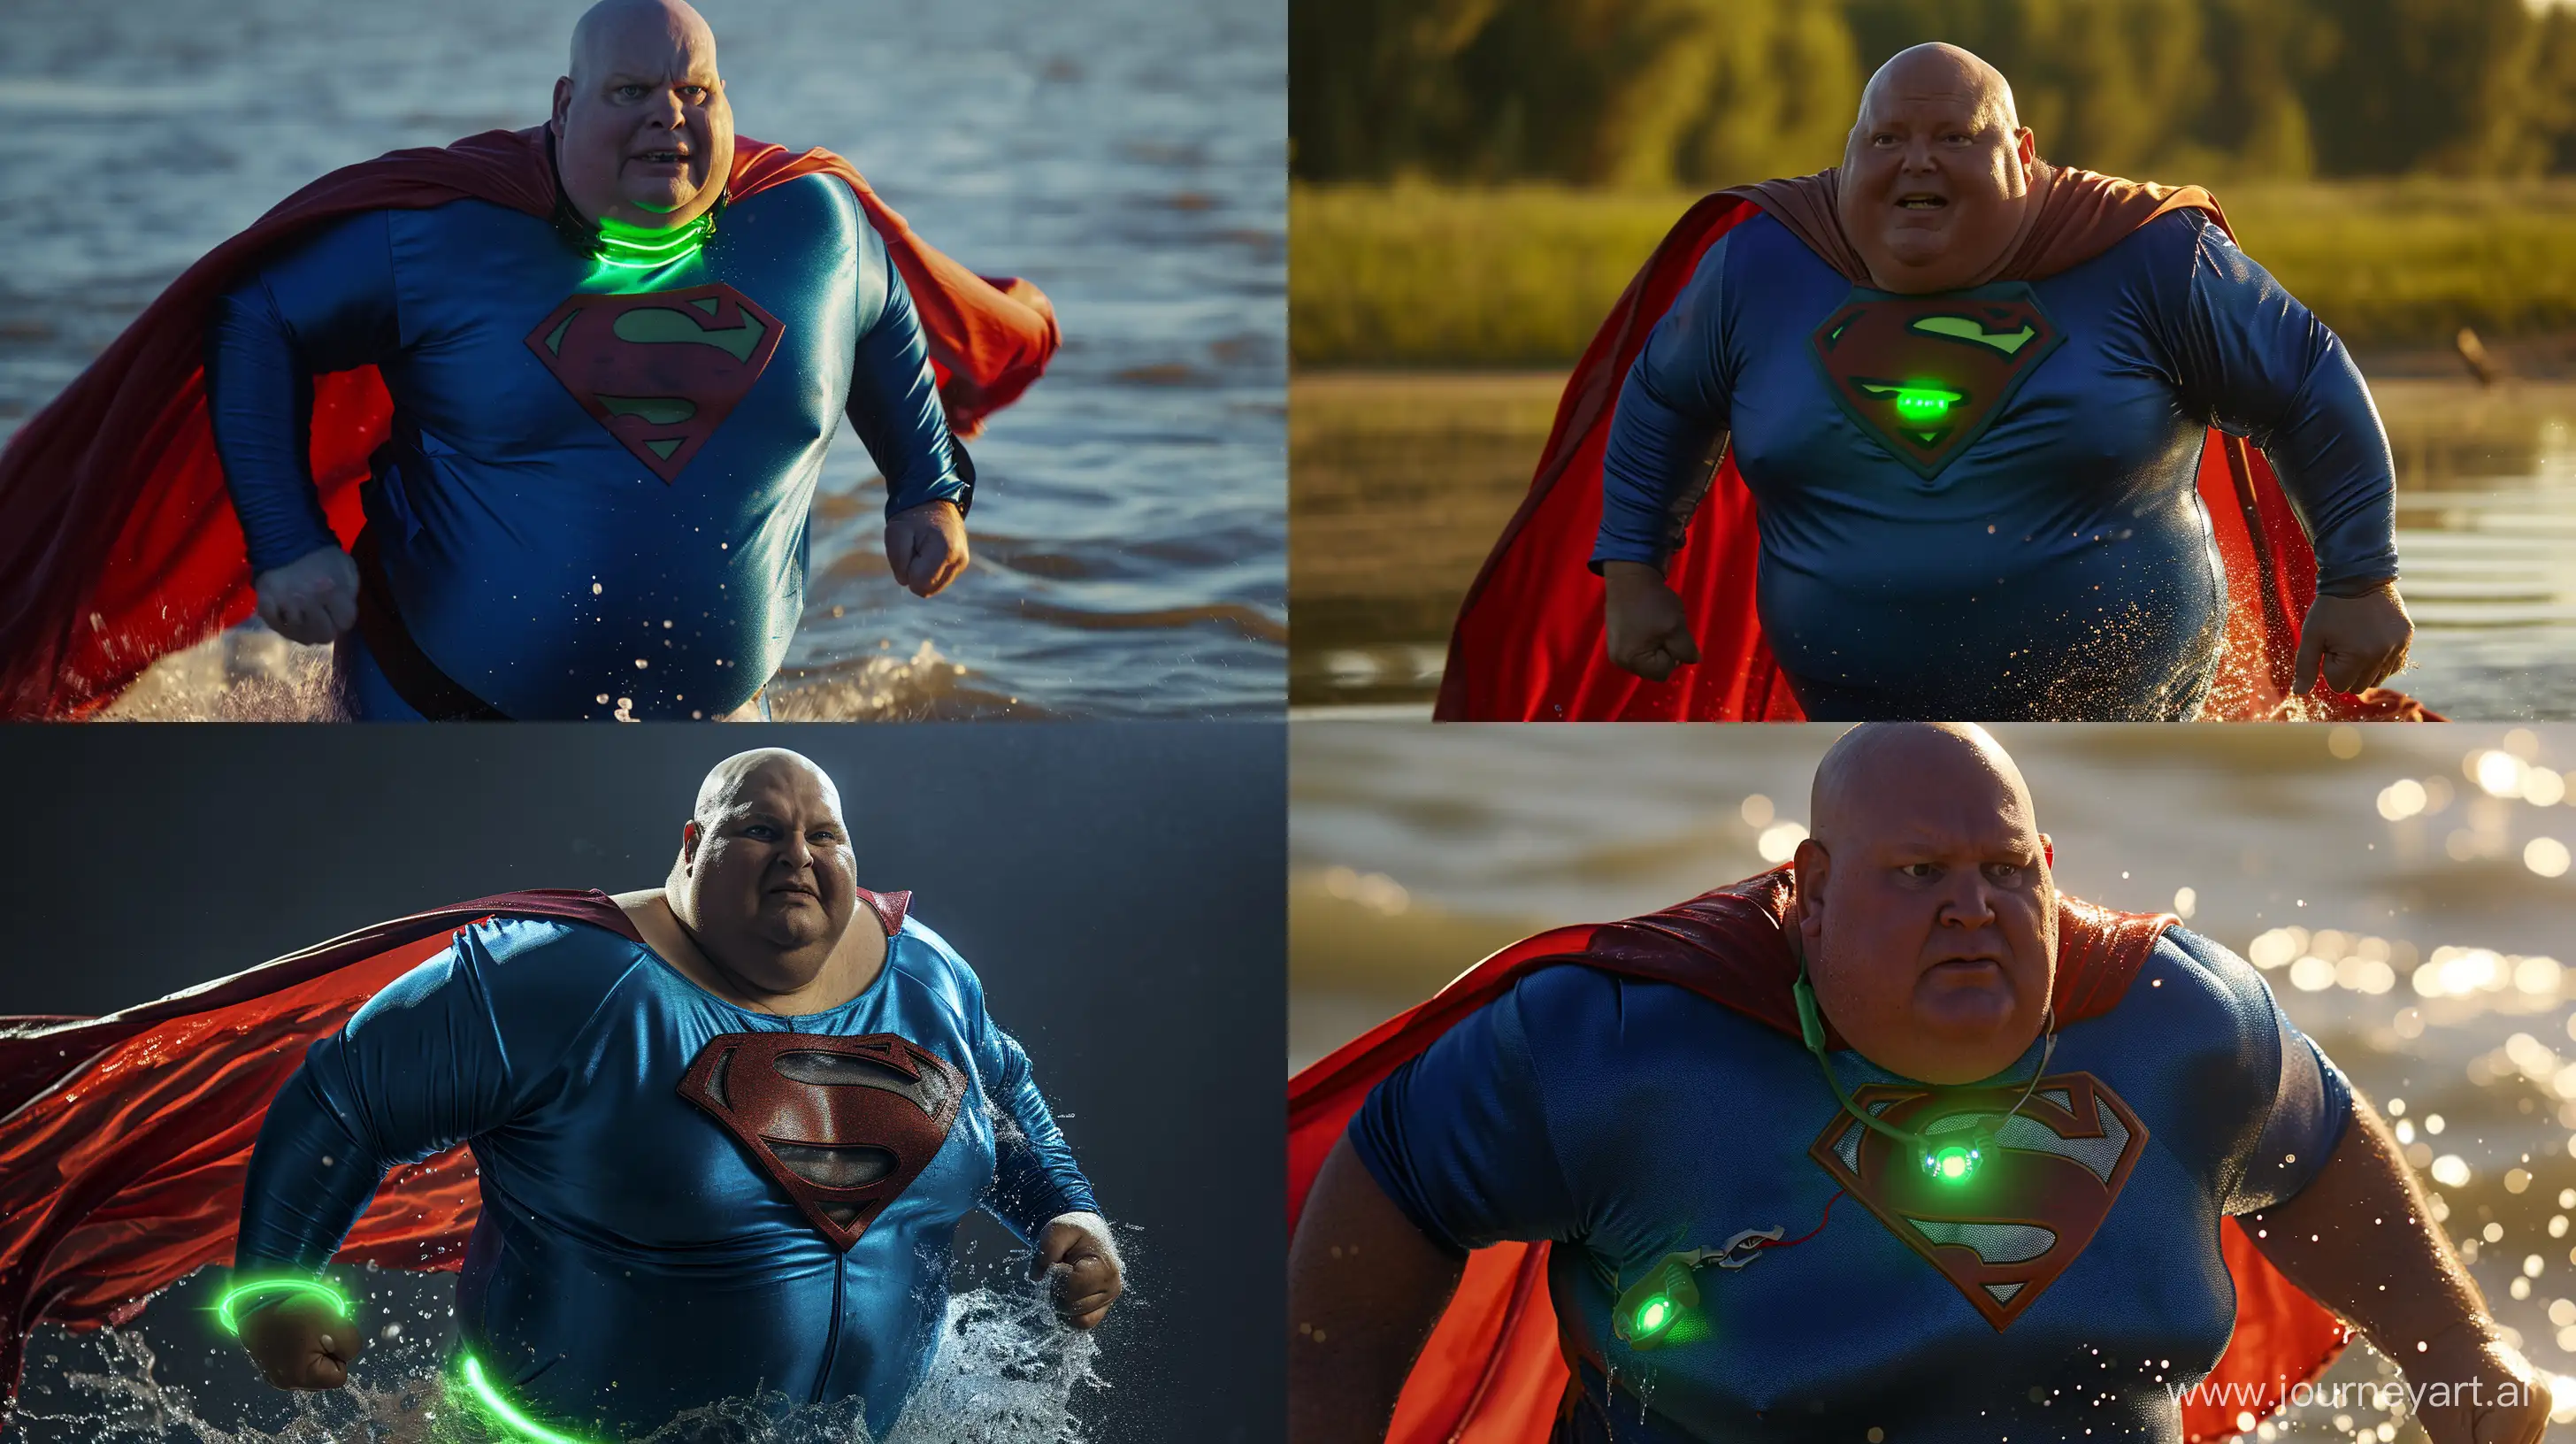 Energetic-60YearOld-Superman-Enjoys-Water-Run-with-Glowing-Canine-Companion